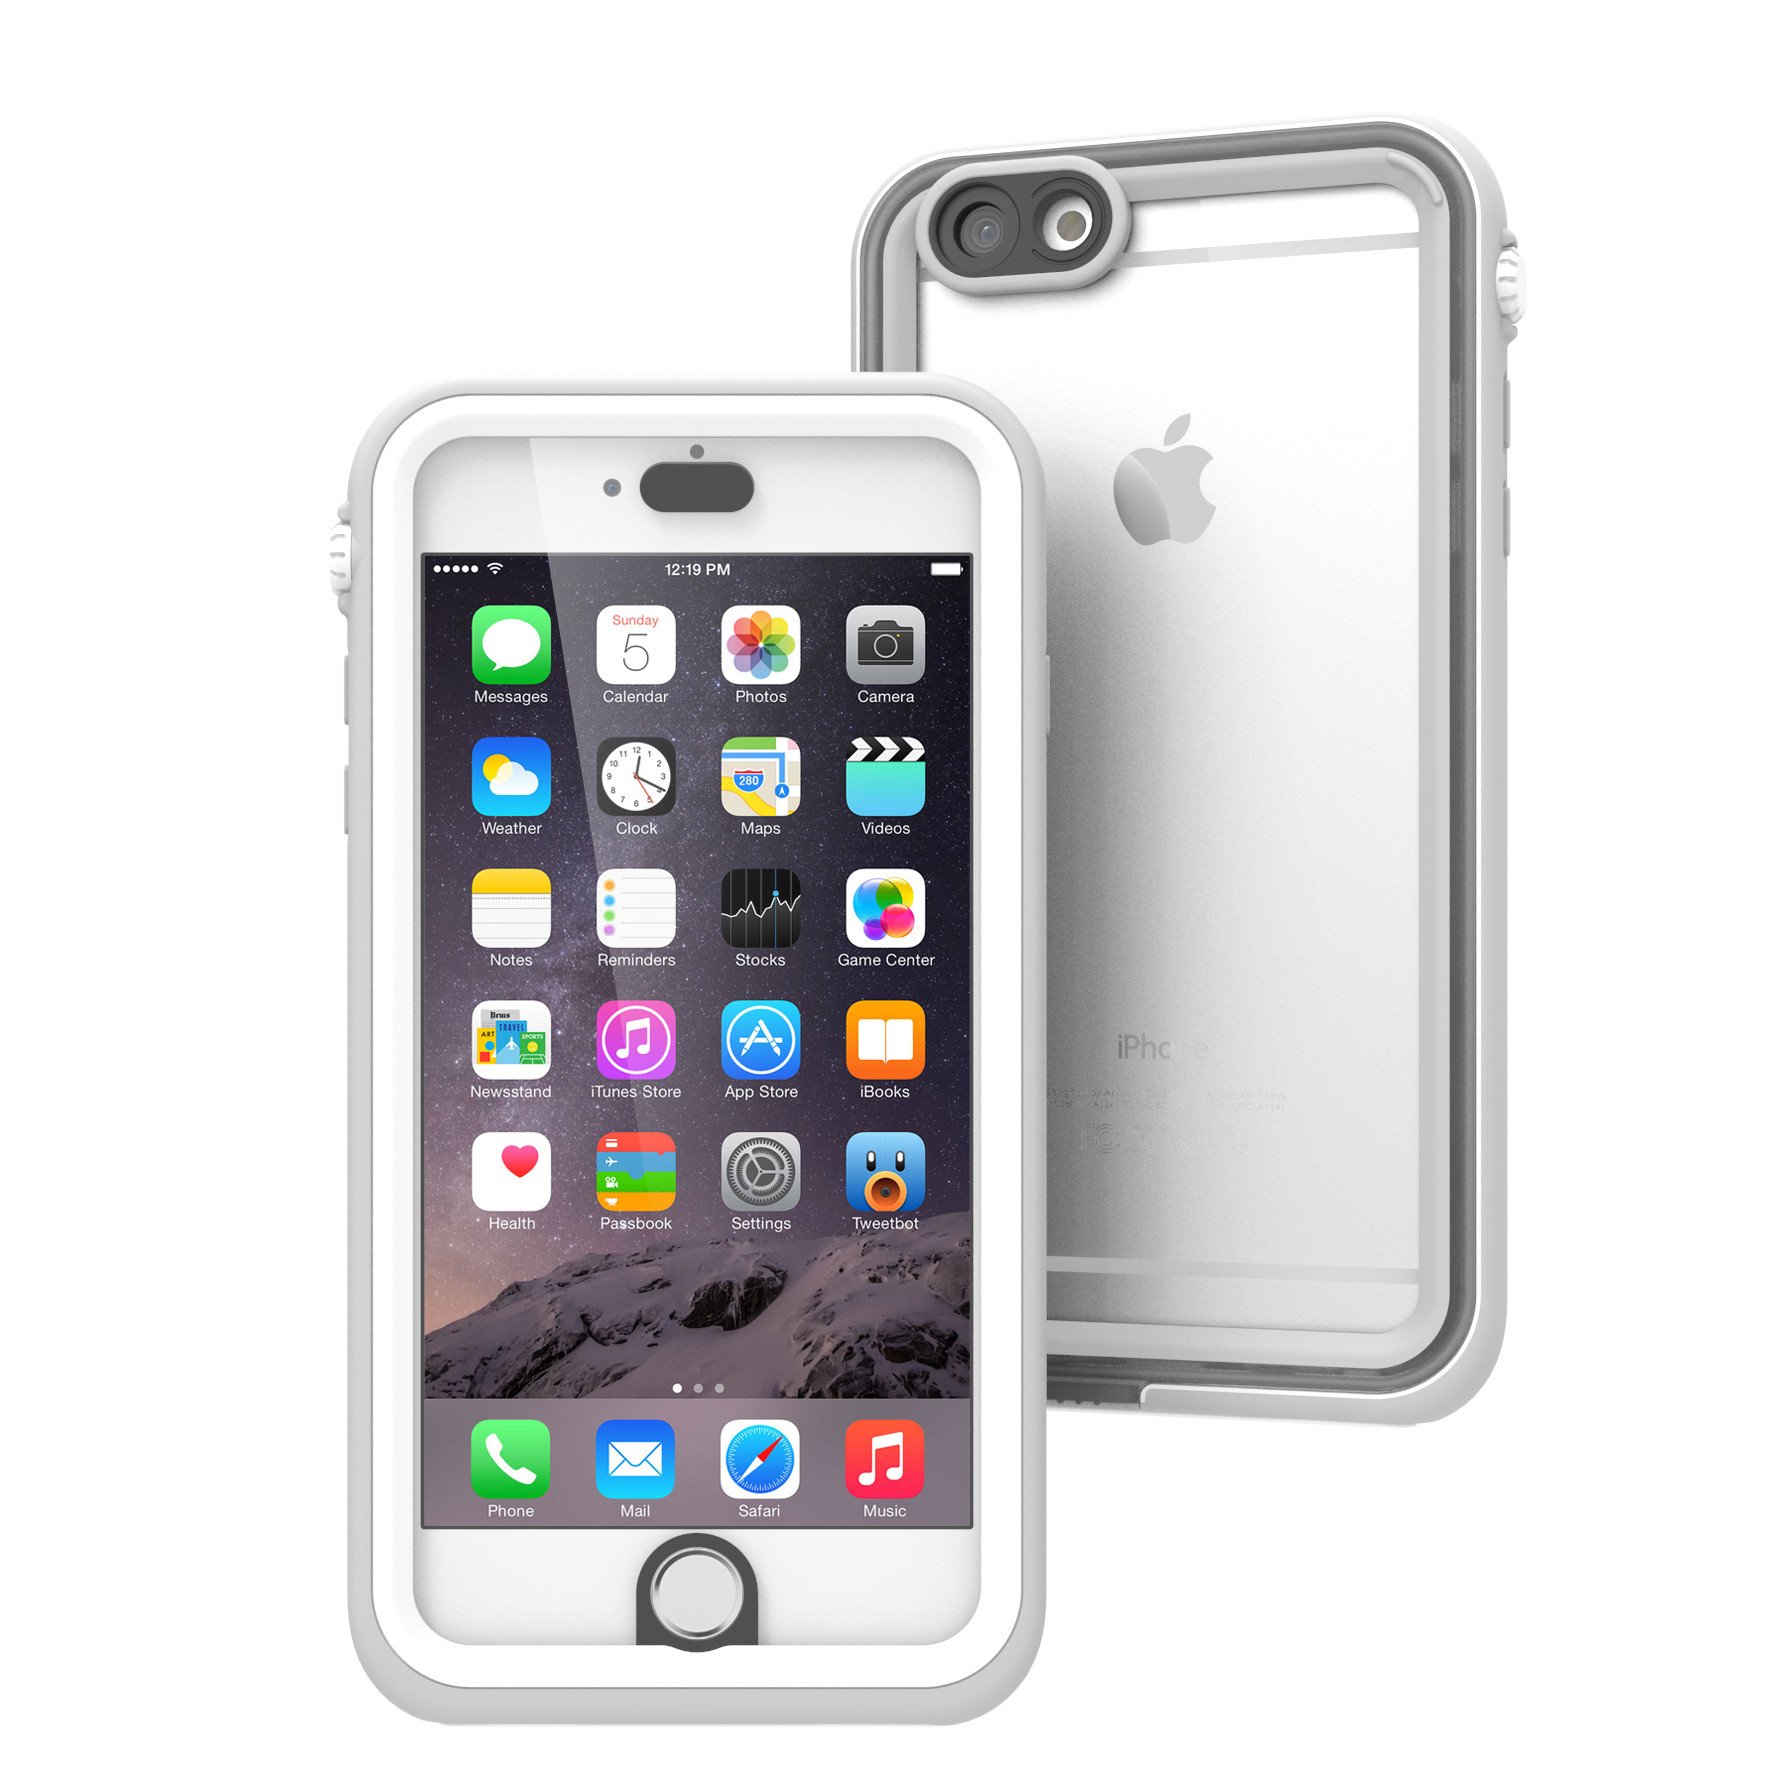 Best waterproof cases for iPhone 6 Plus: Catalyst